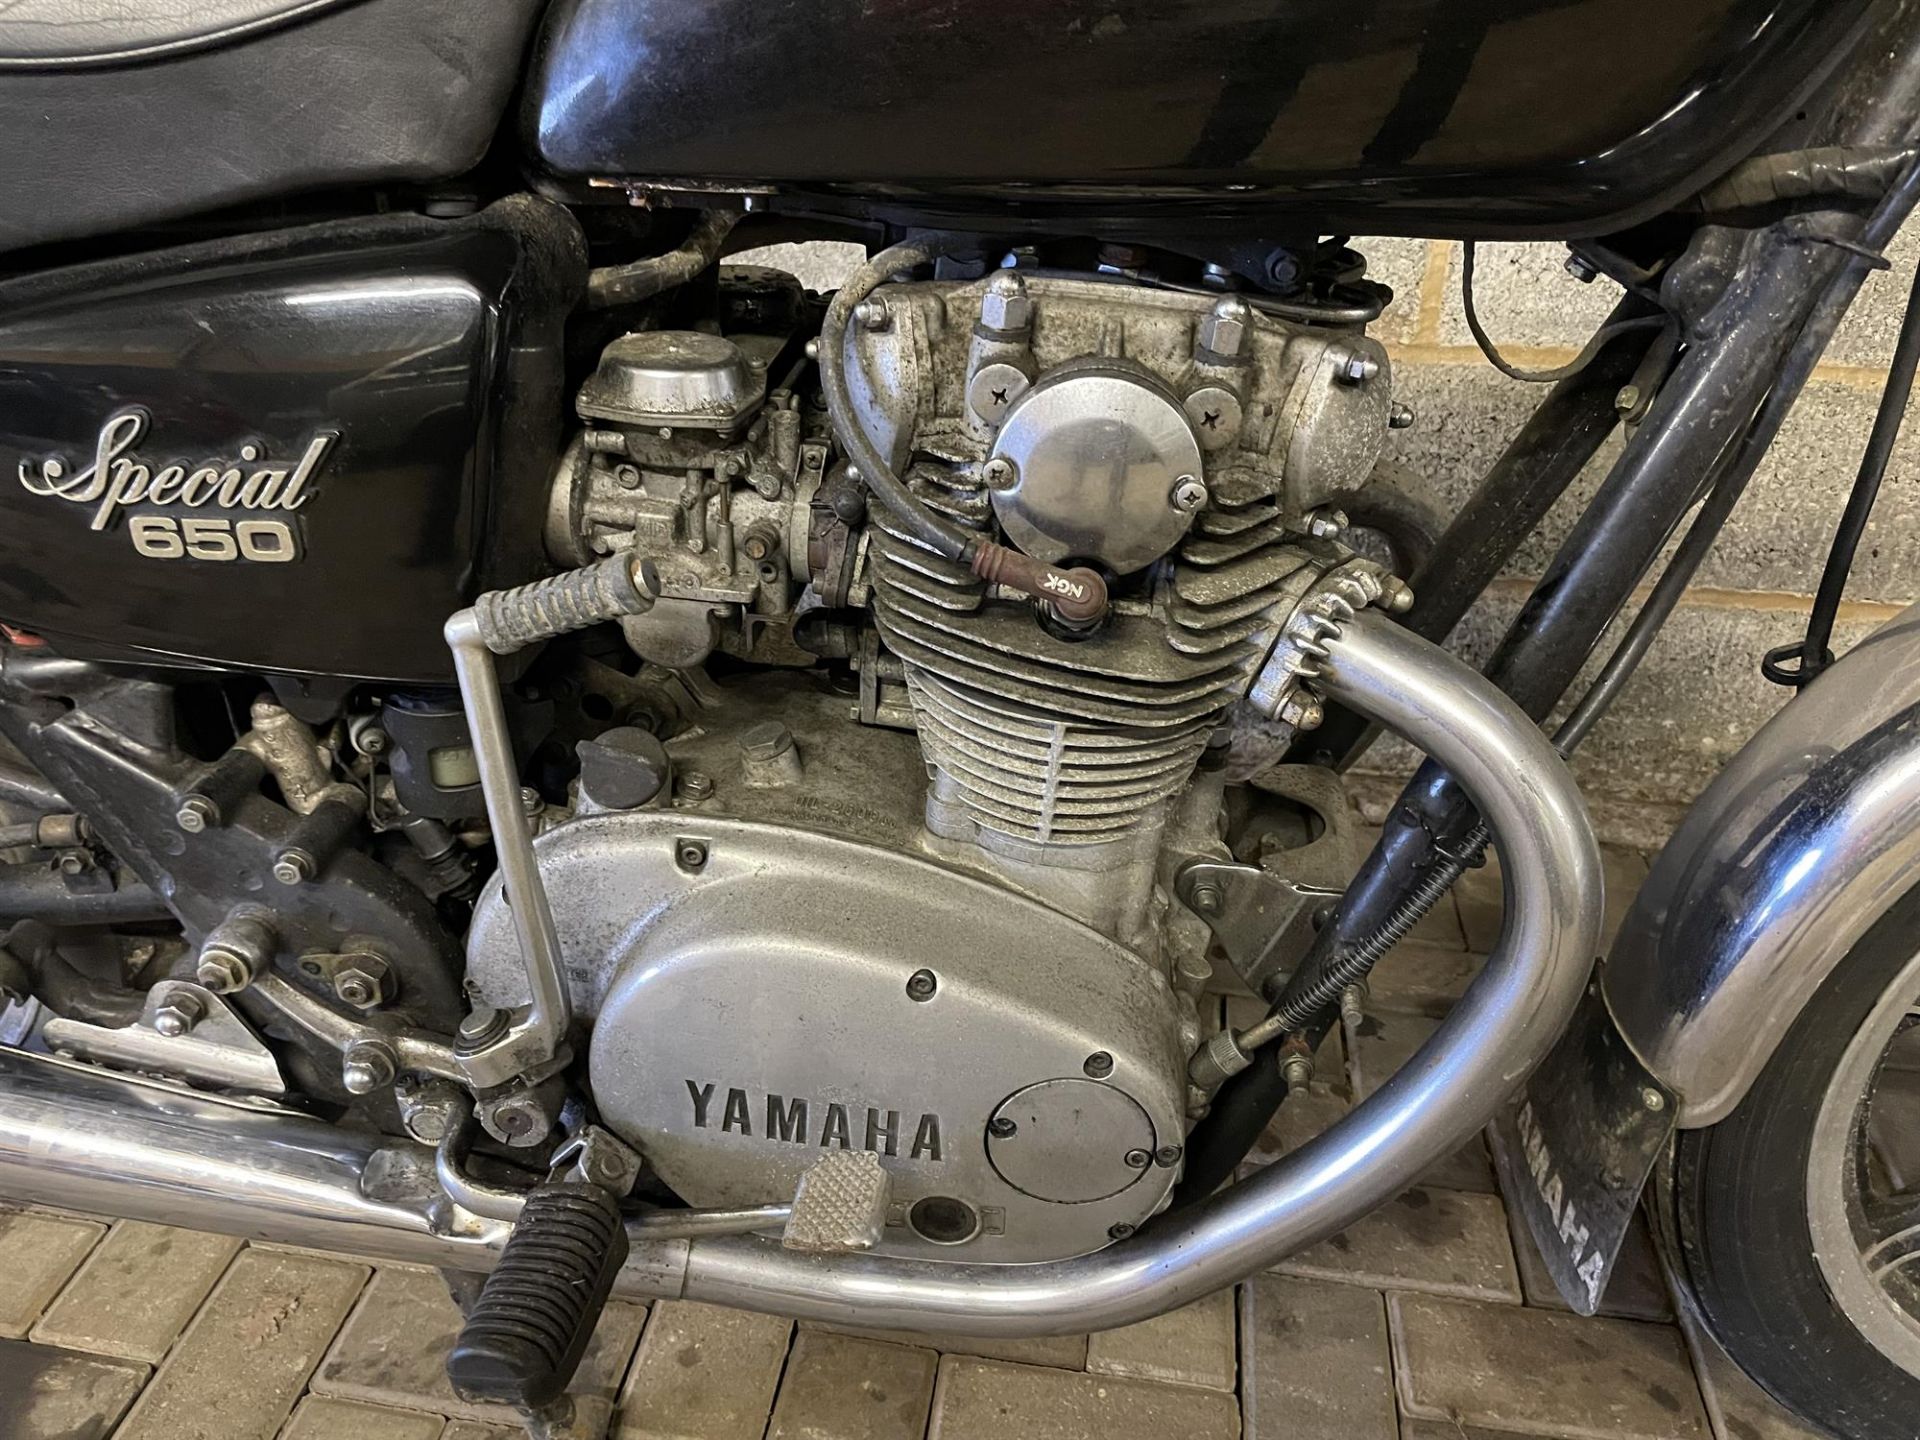 1980 Yamaha XS650 Special 649cc - Image 3 of 10